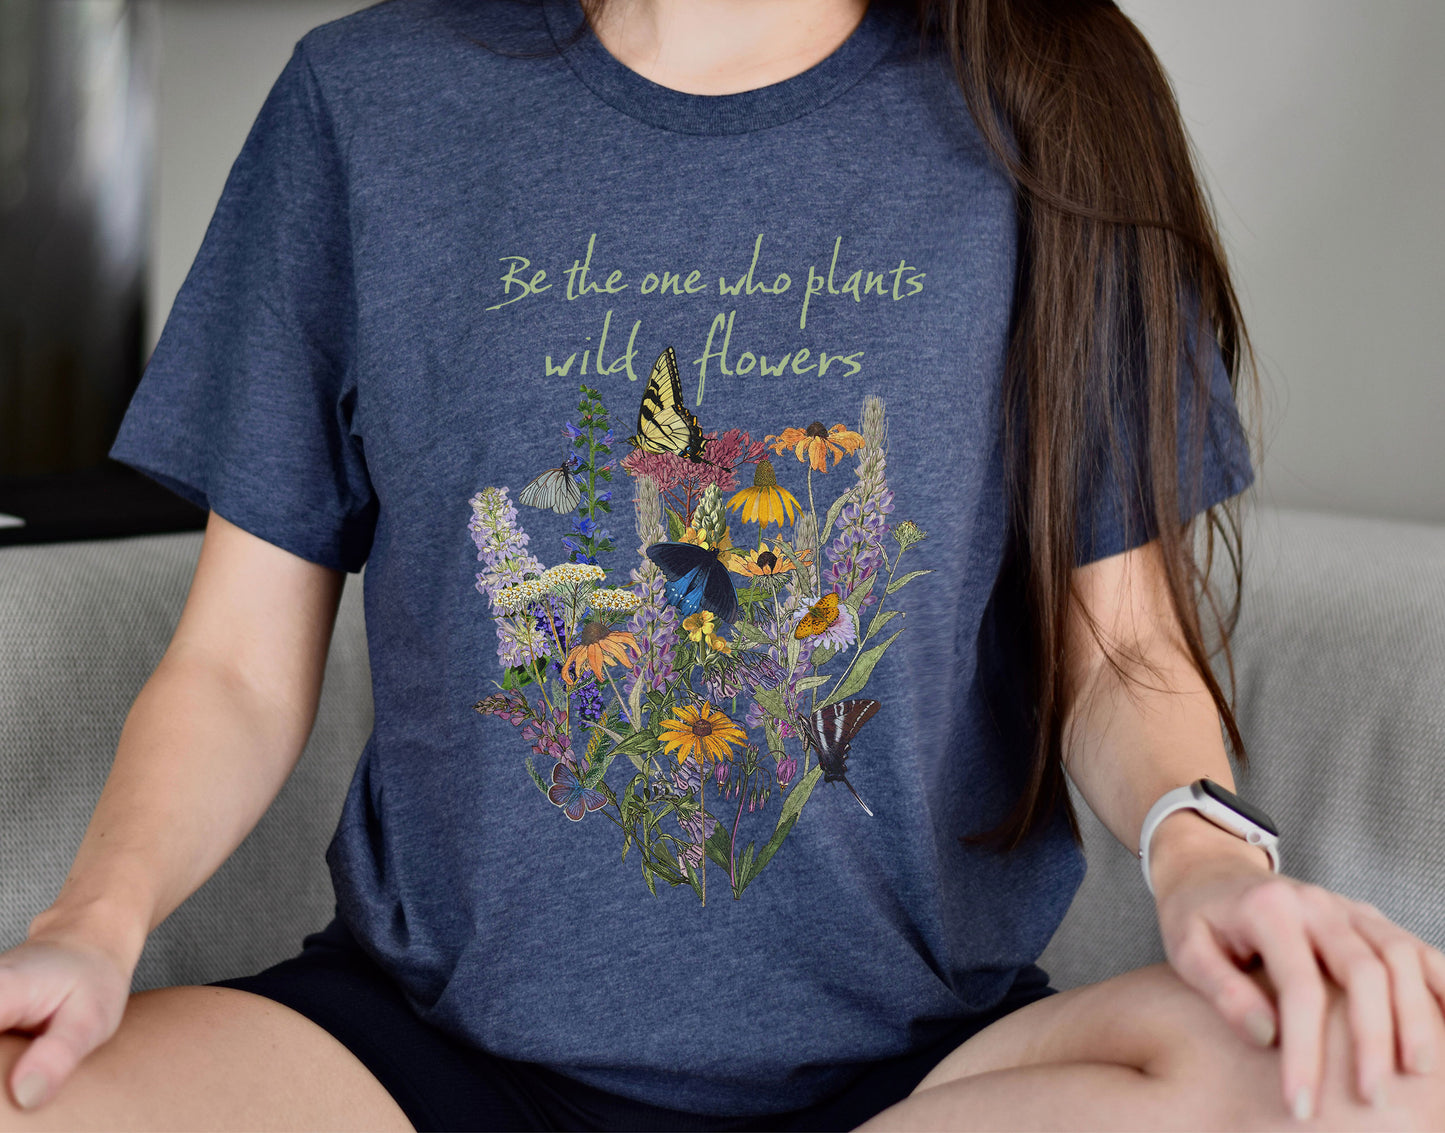 Naturalist Butterfly Garden tee shirt, Native Plants, Swallowtail, Ecology, Conservation, Positivity, Save the Bees, garden gift, NO AI!